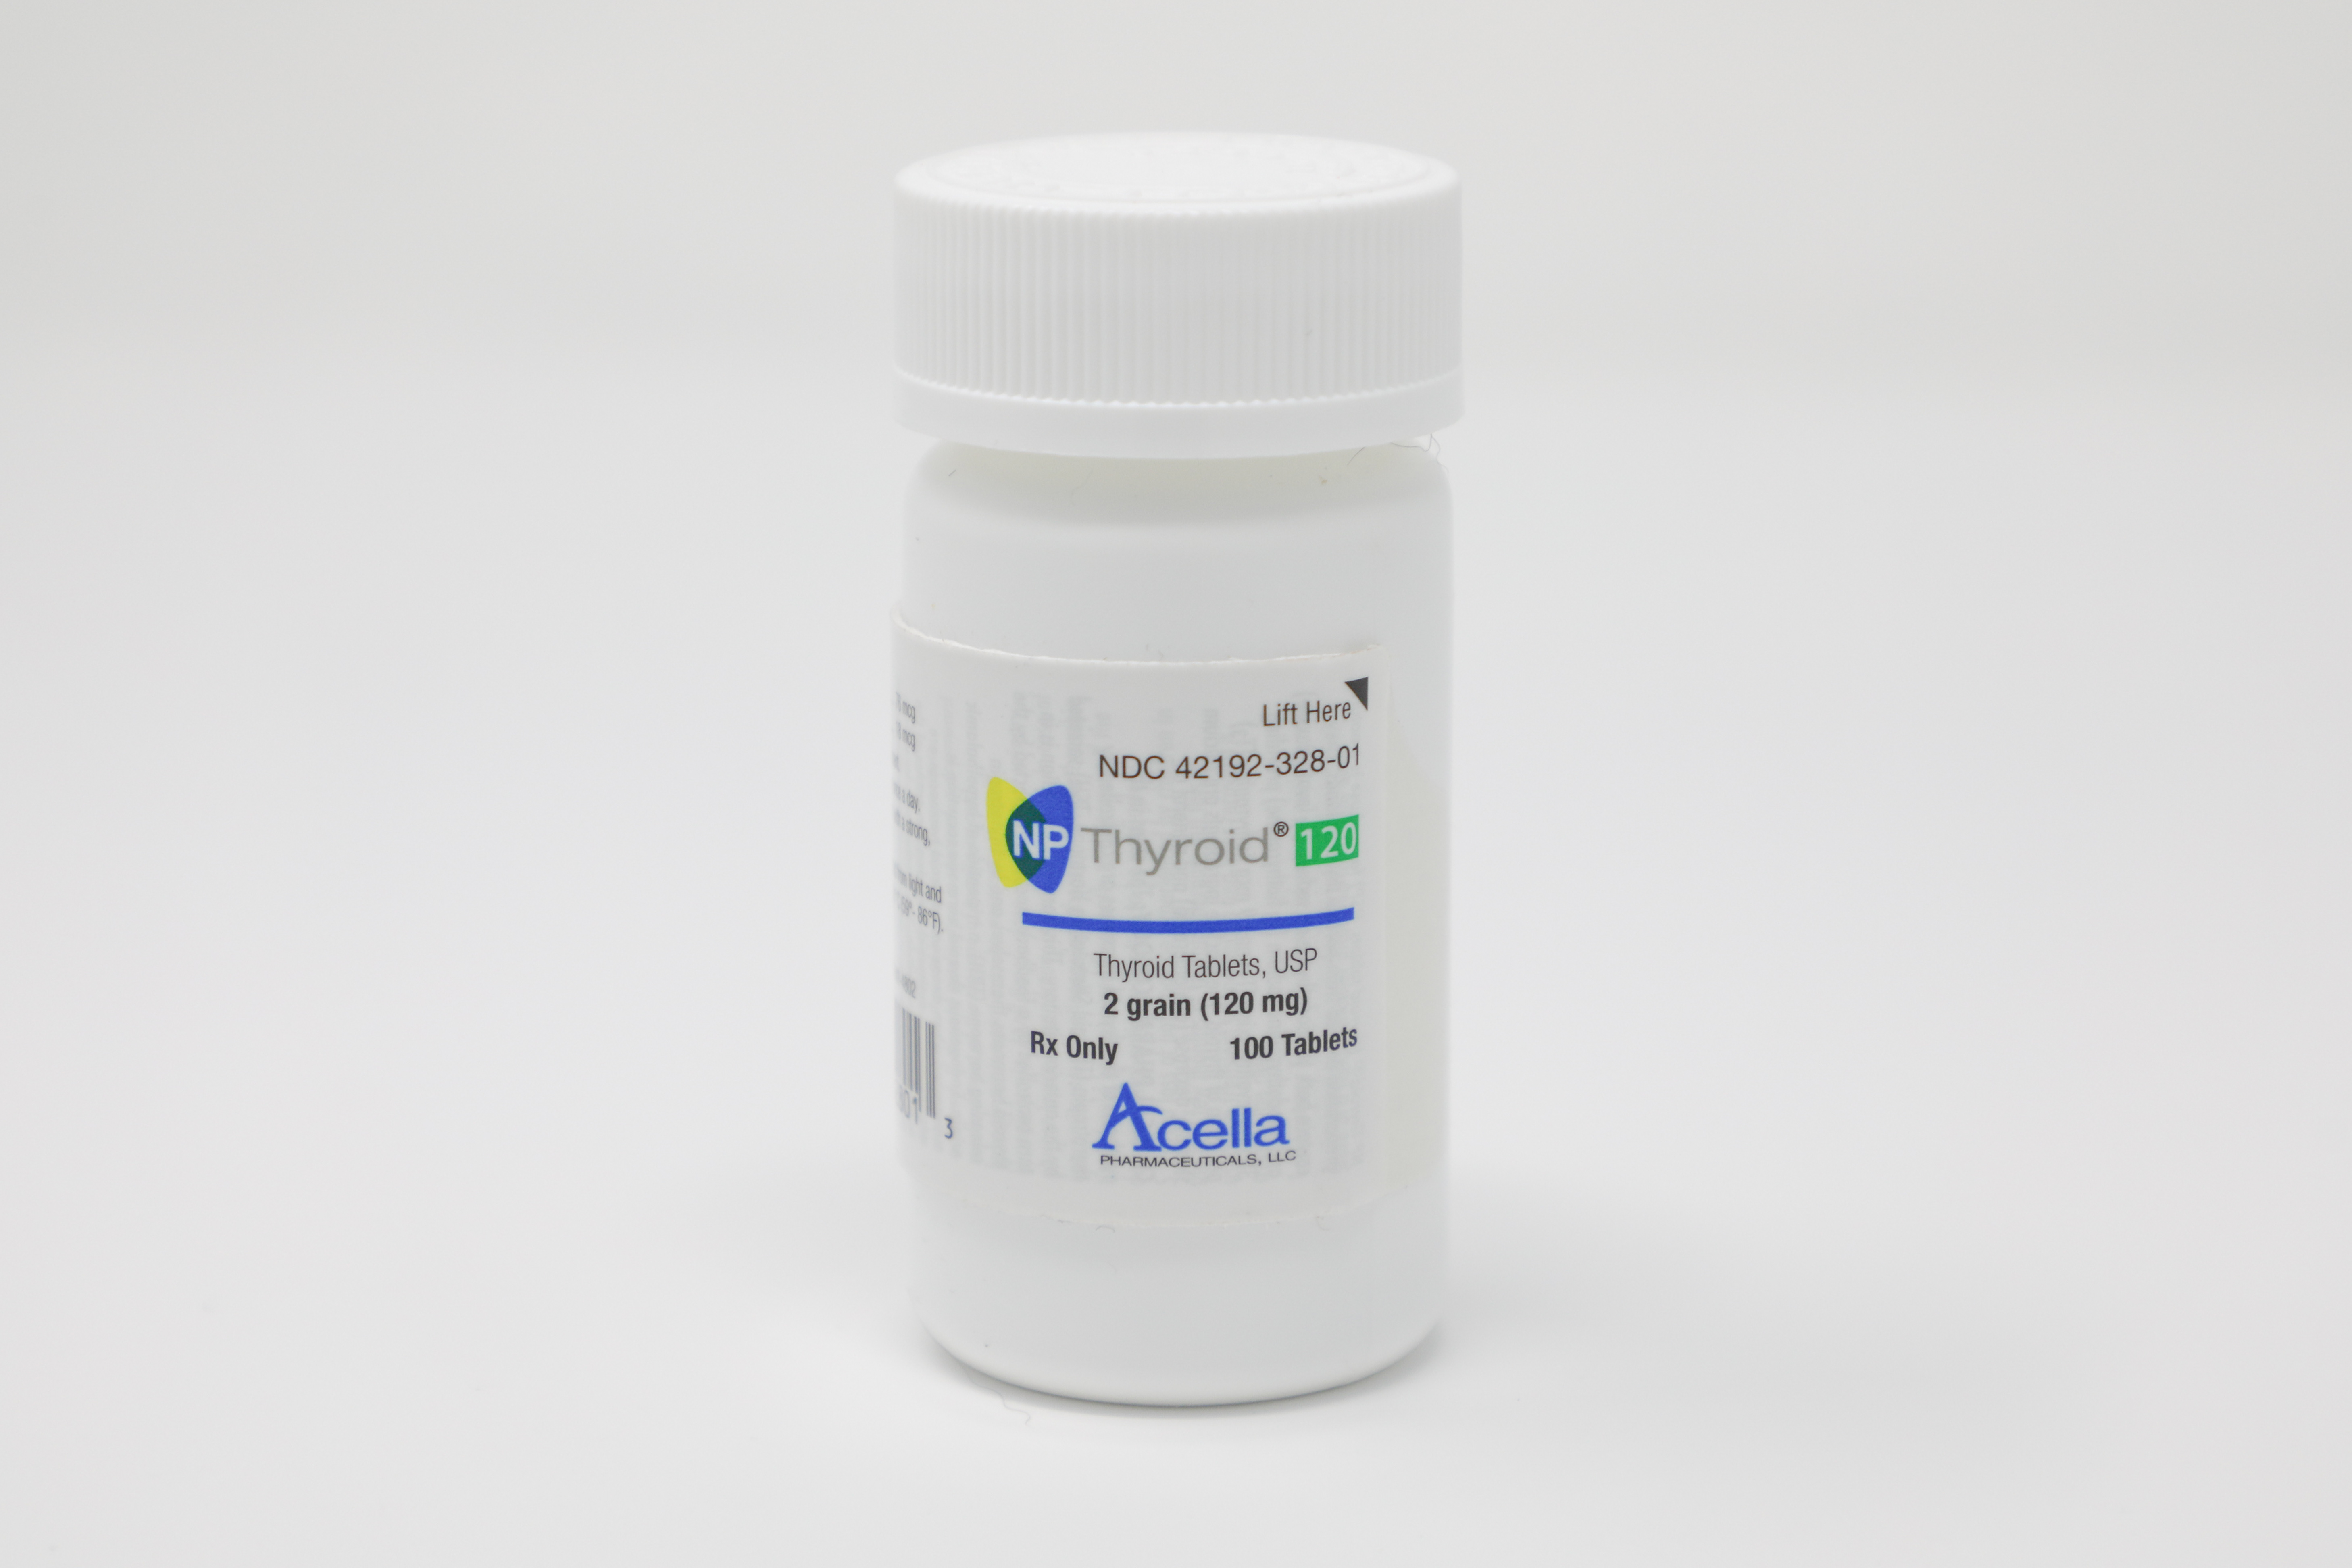 NP Thyroid 120 mg tablets